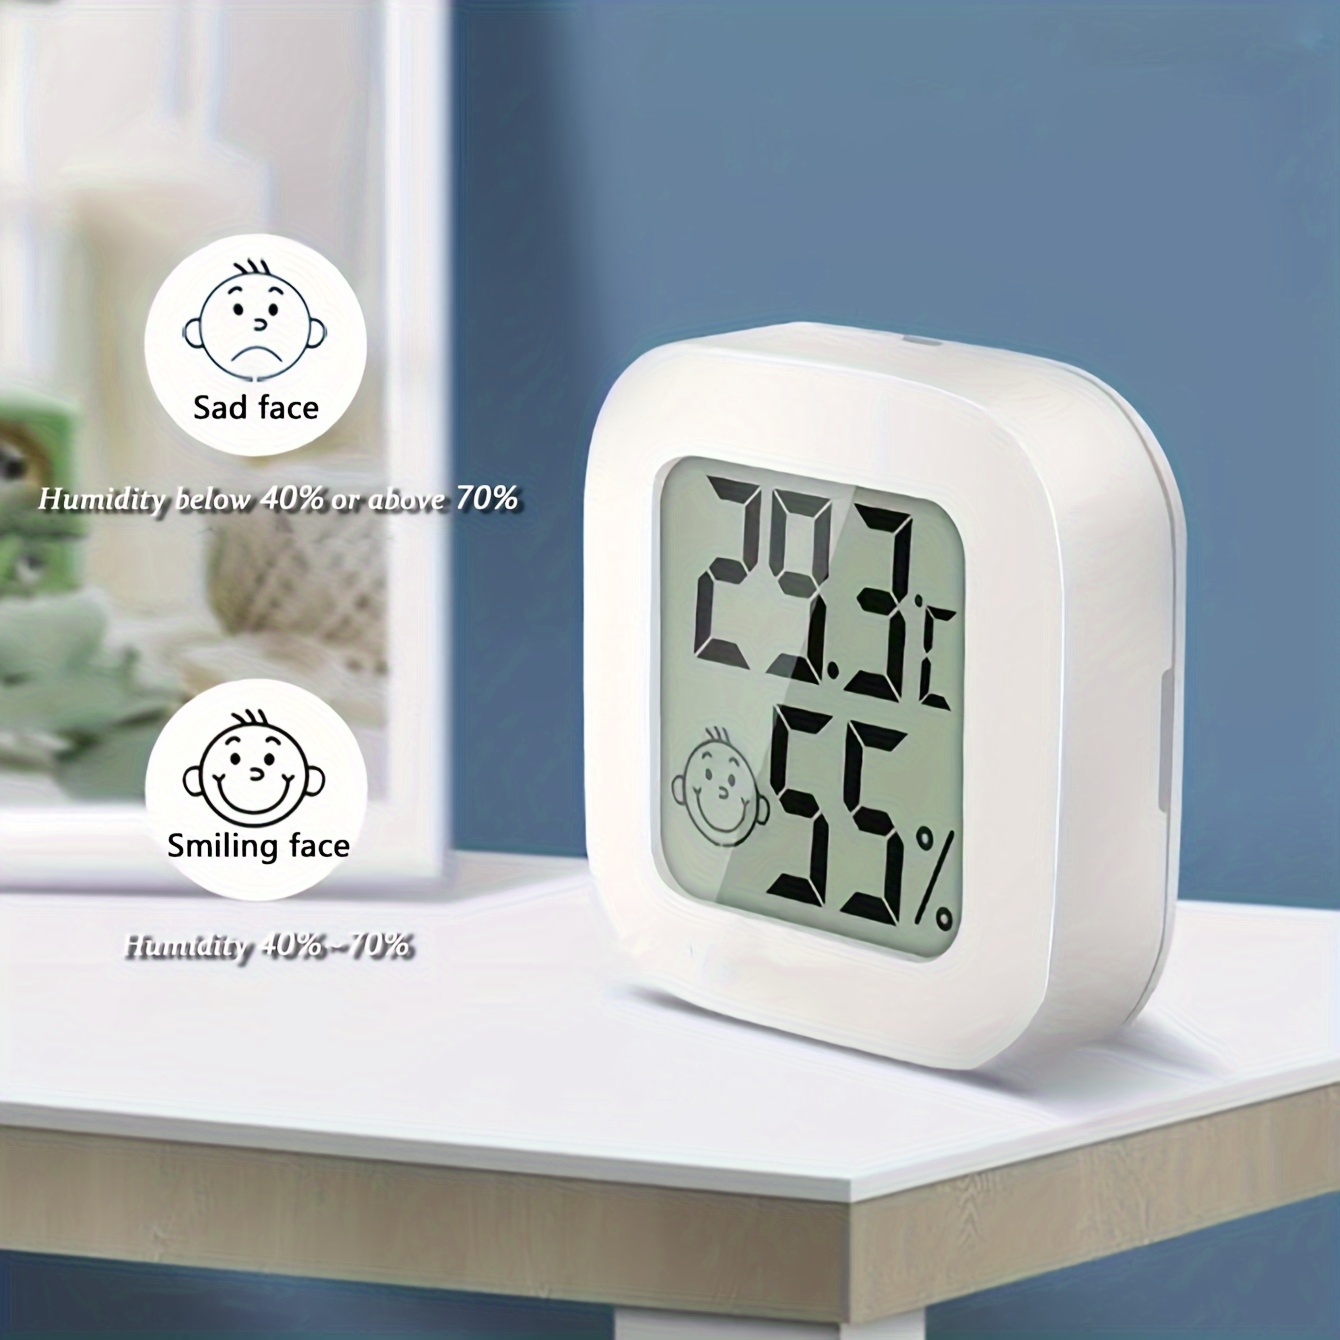 Mini Hygrometer Thermometer Digital Indoor Humidity Gauge Monitor With Temperature  Meter Sensor